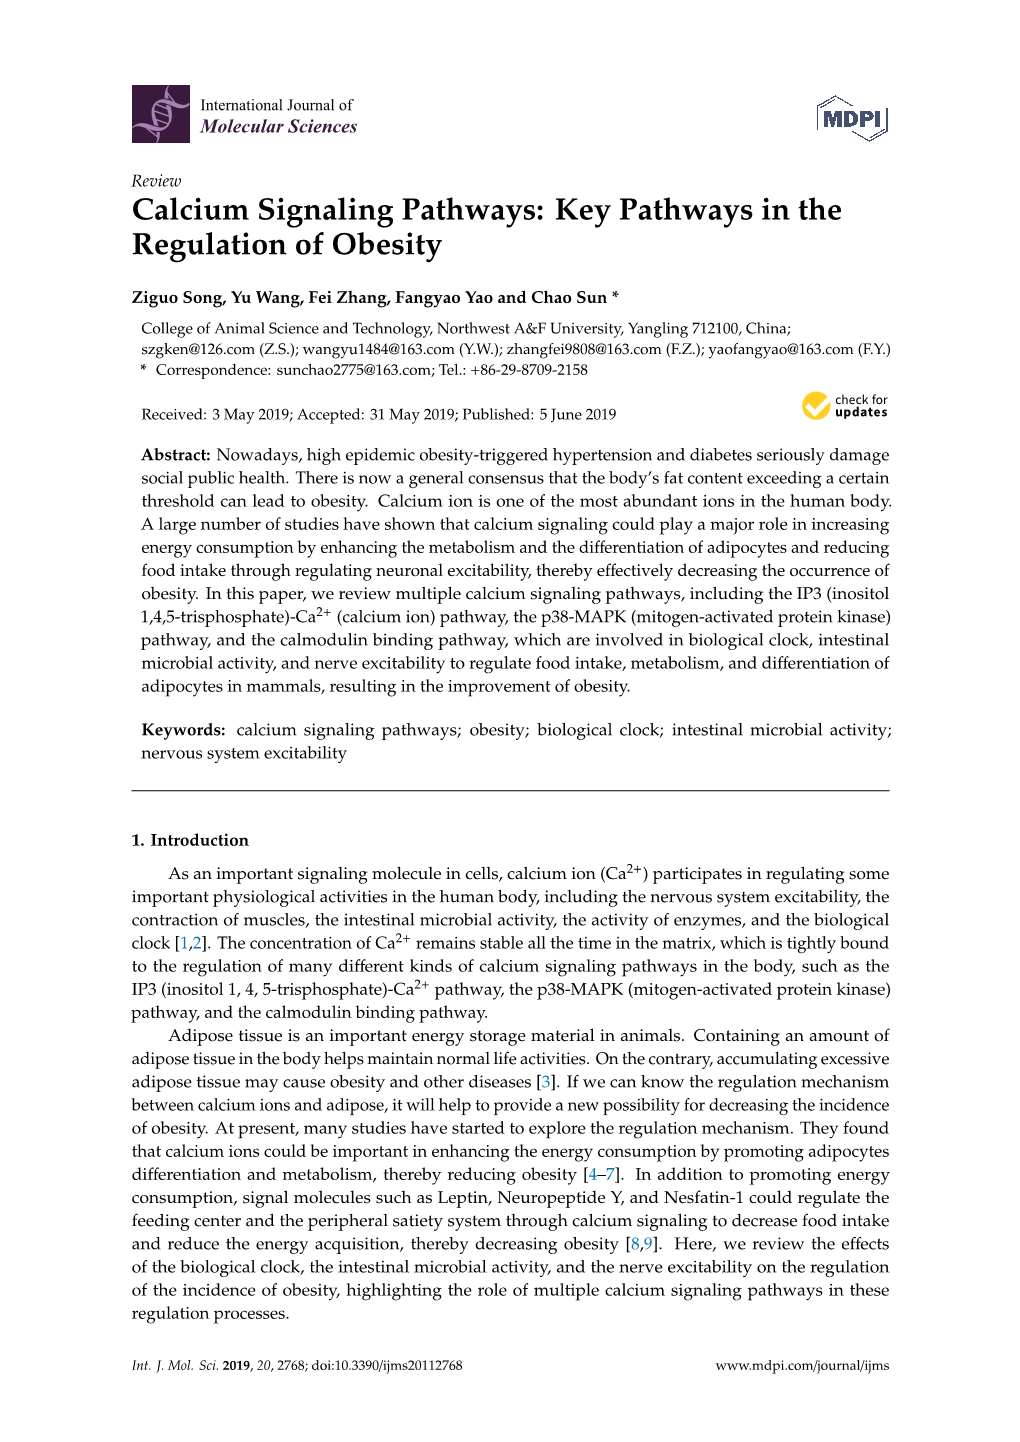 Calcium Signaling Pathways: Key Pathways in the Regulation of Obesity